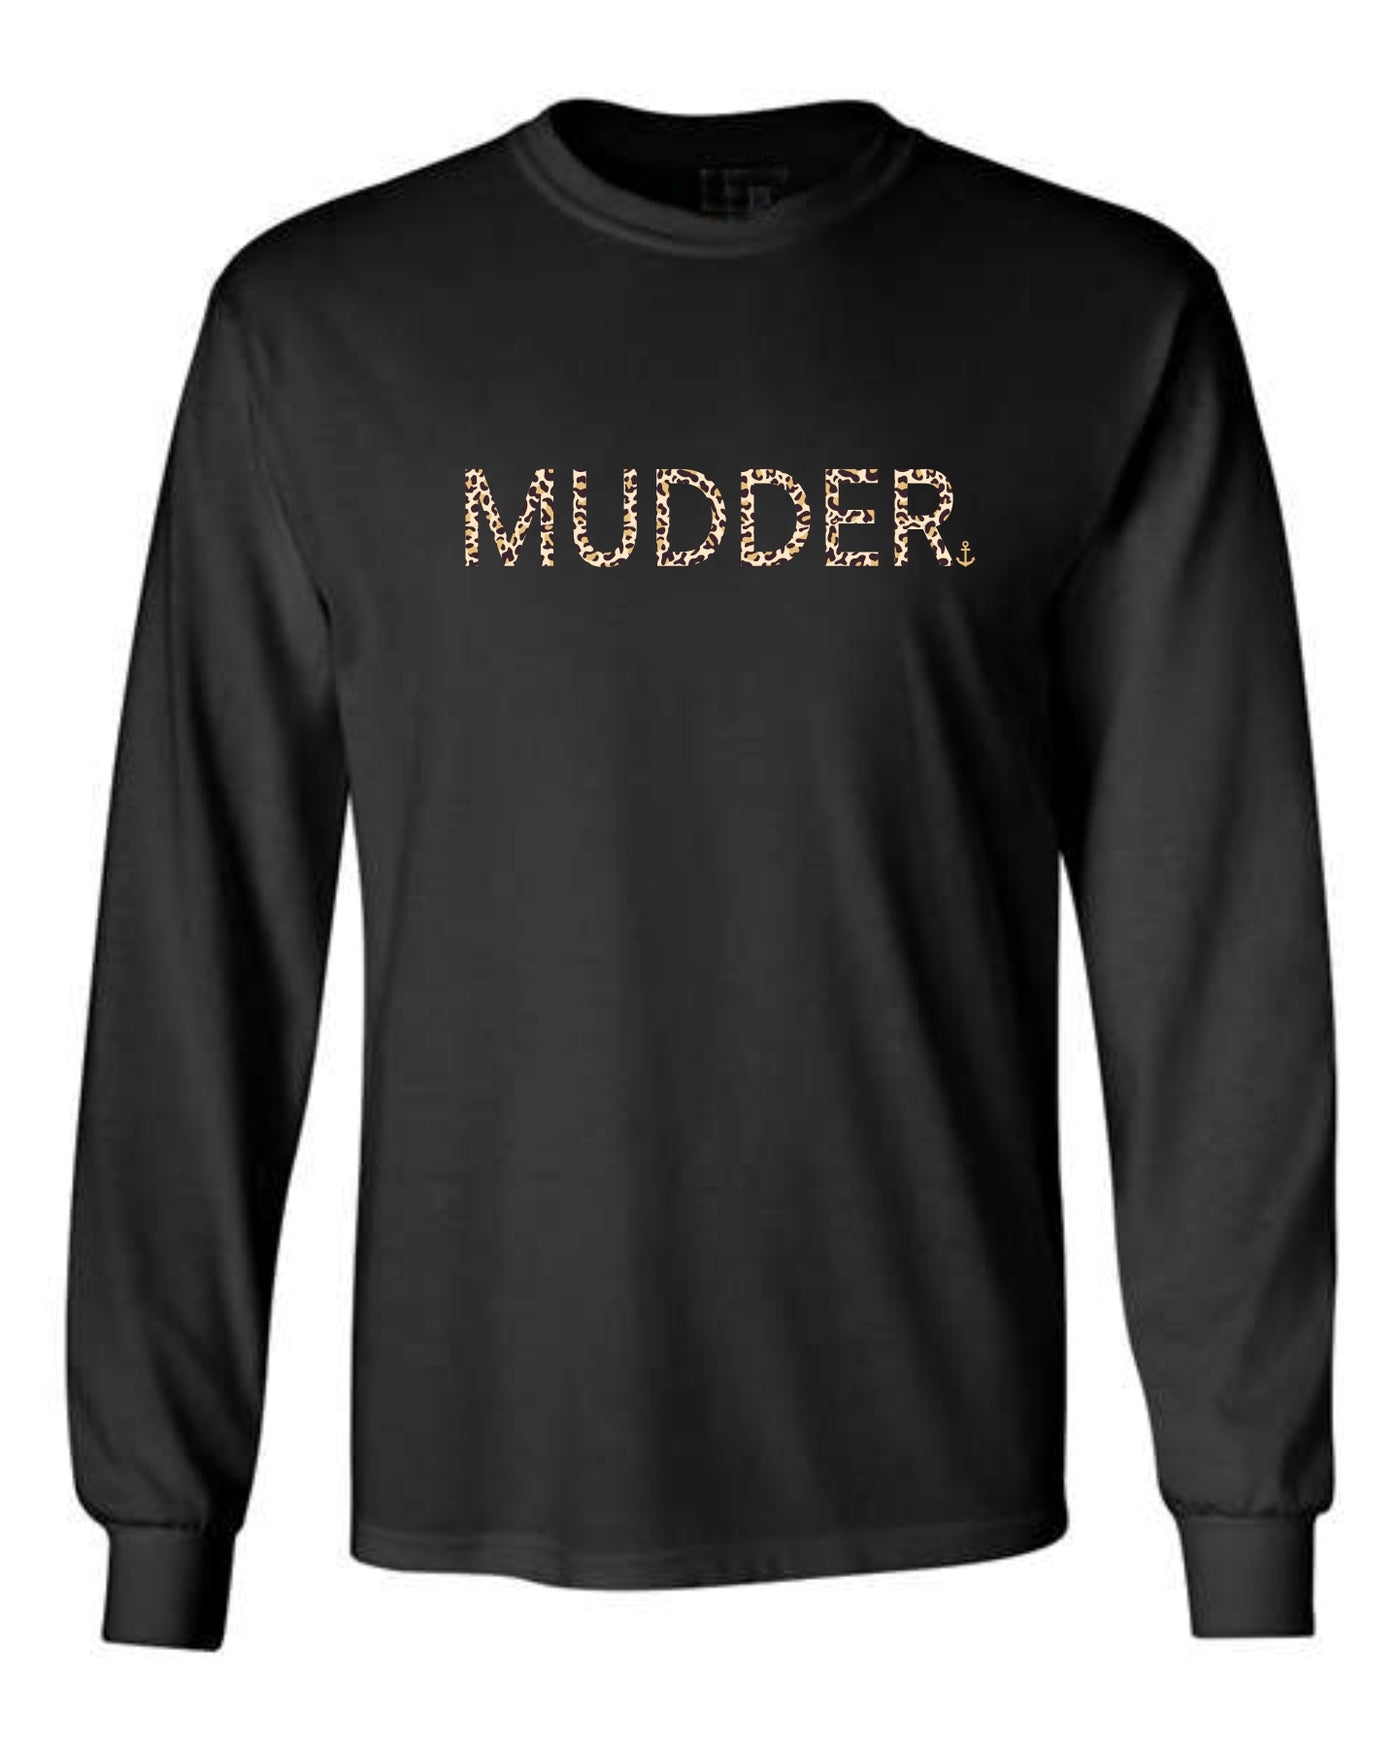 "Mudder" Cheetah Unisex Long Sleeve Shirt